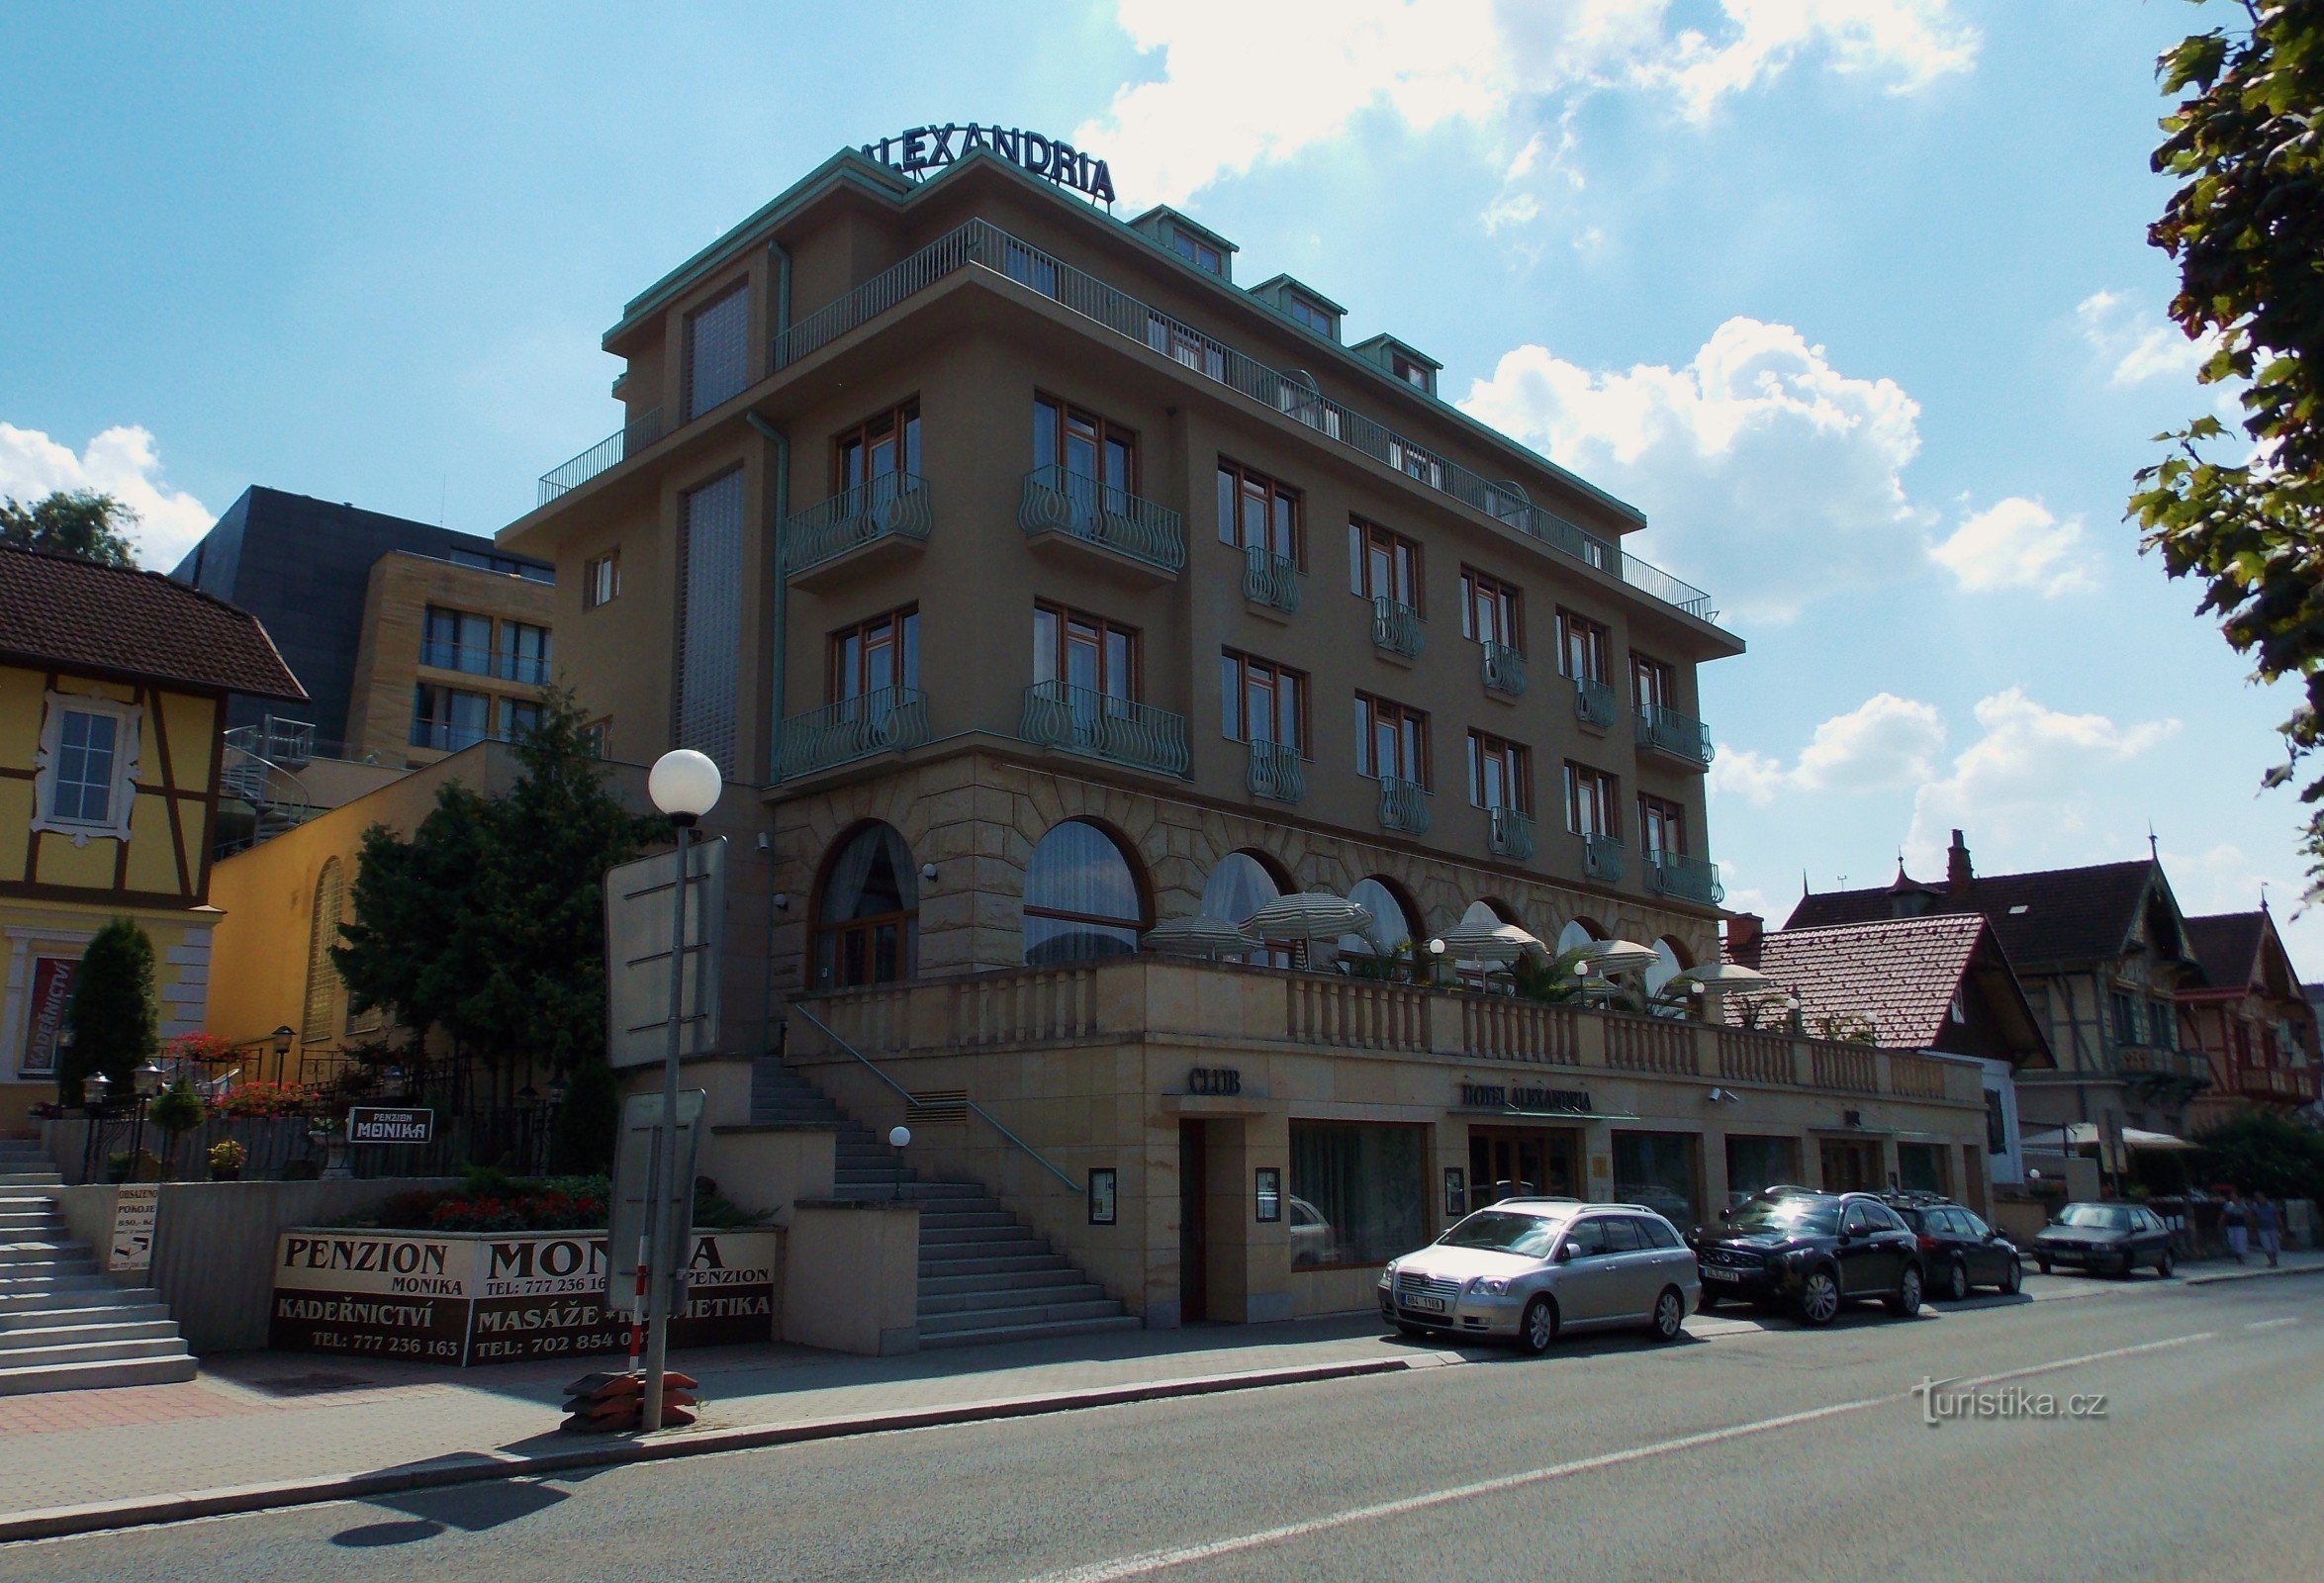 Hébergement à l'hôtel Alexandrie - Luhačovice